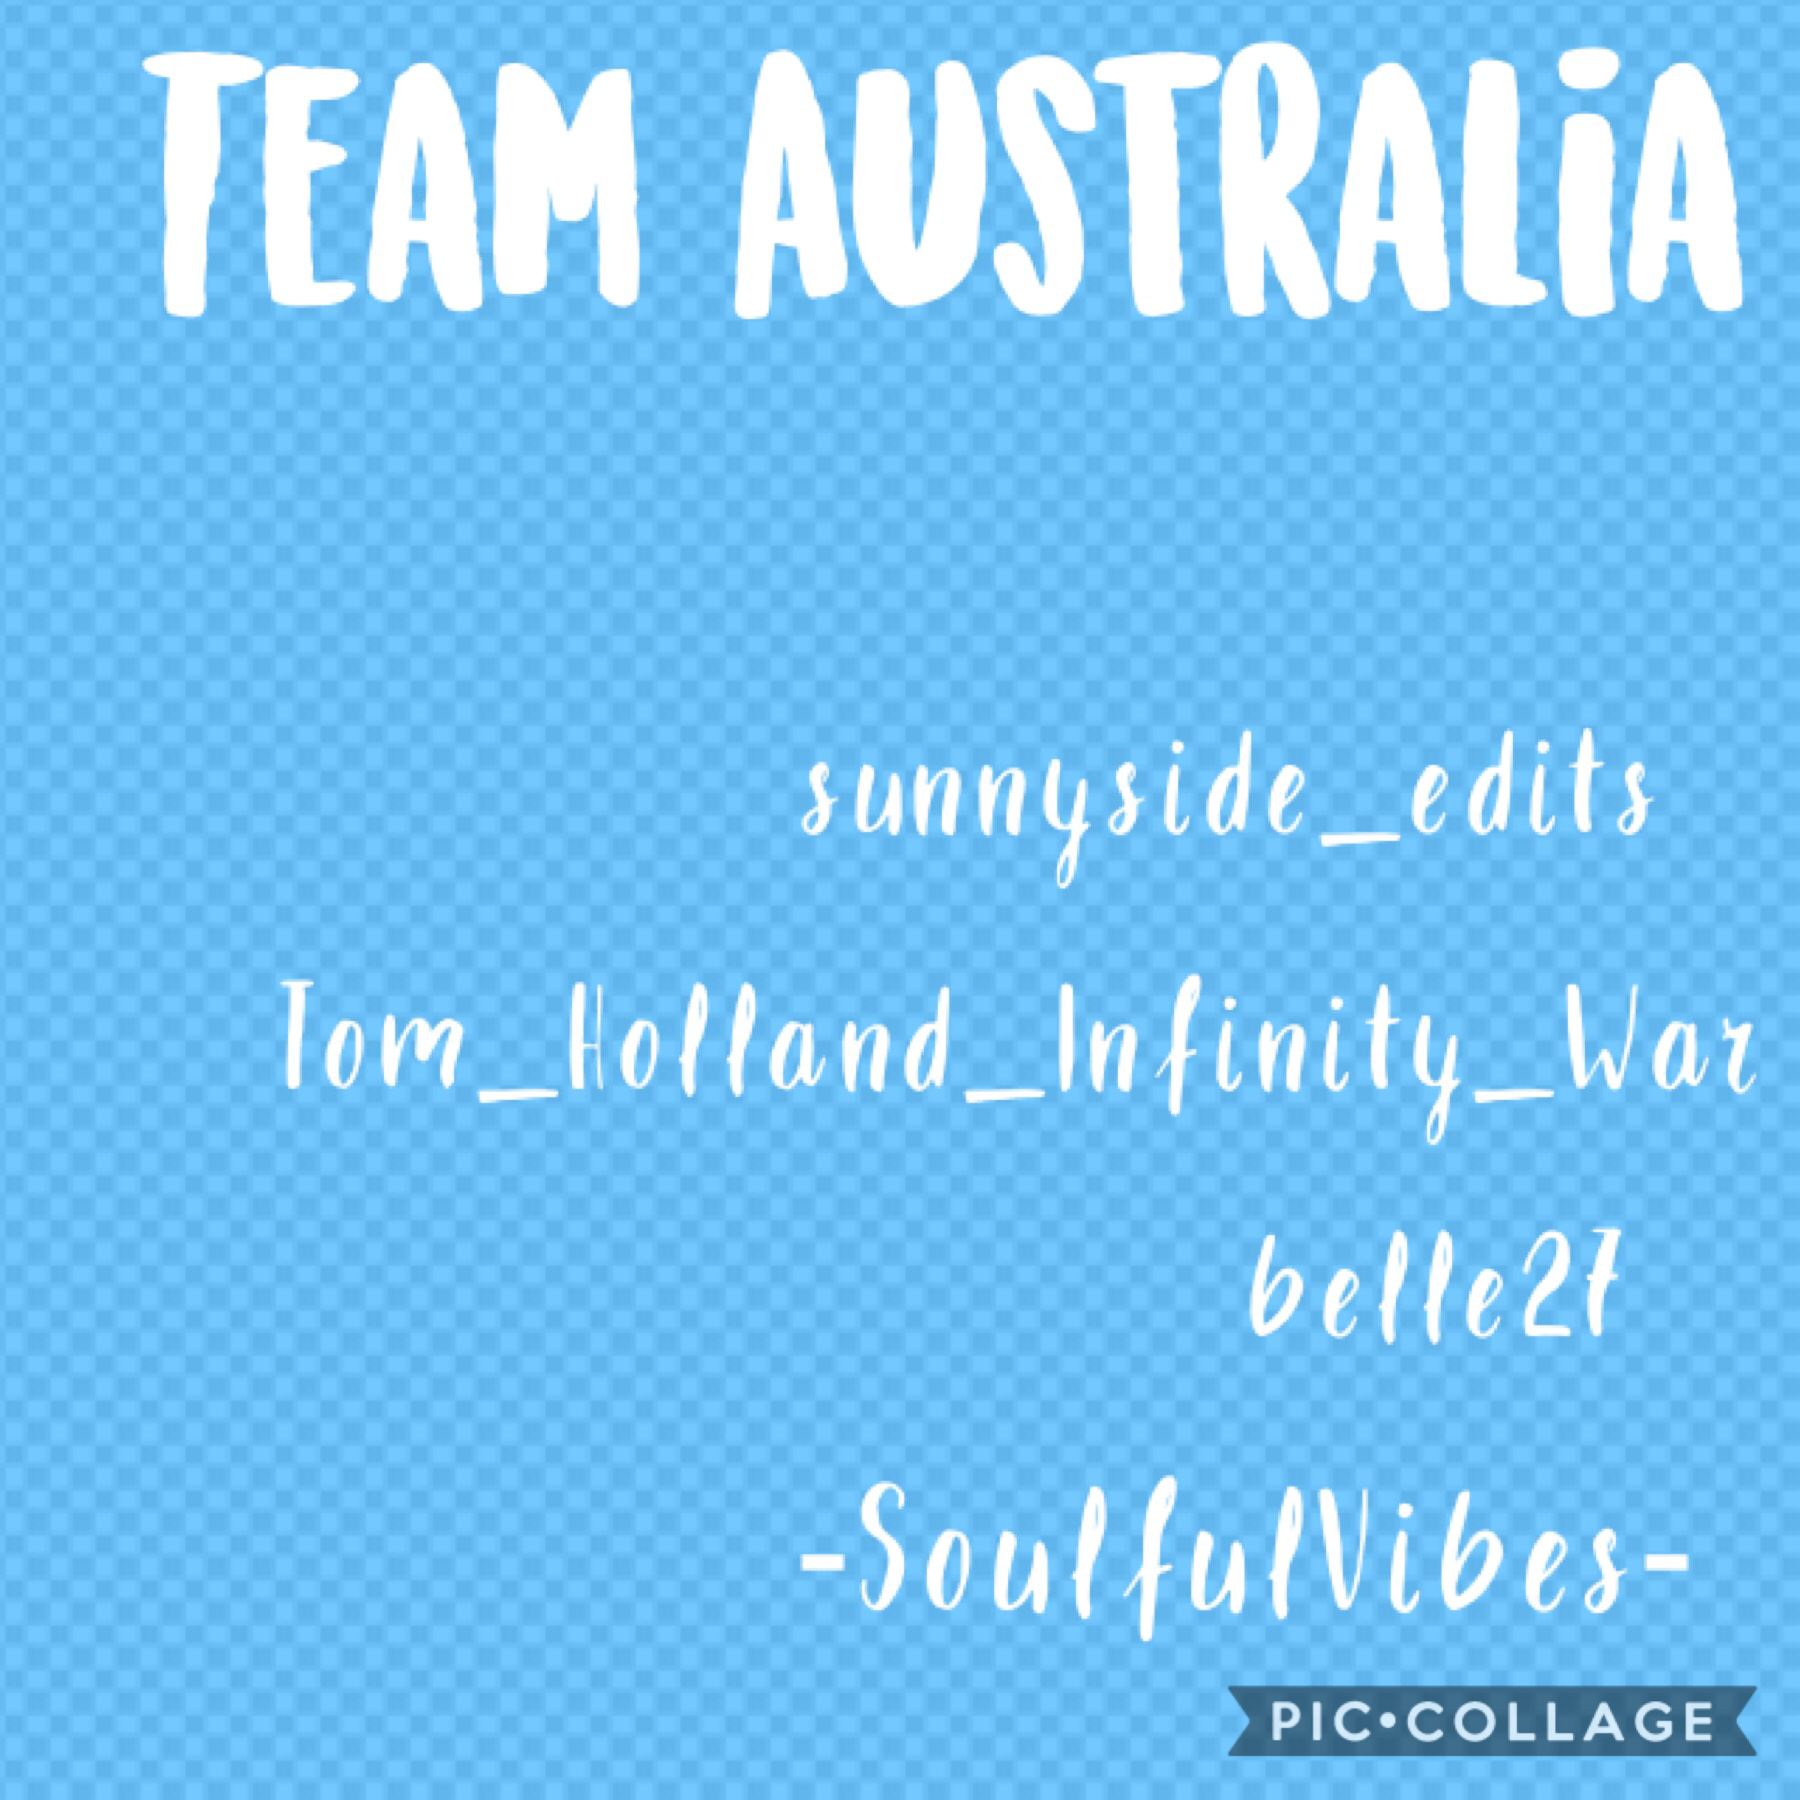 Team Australia! 